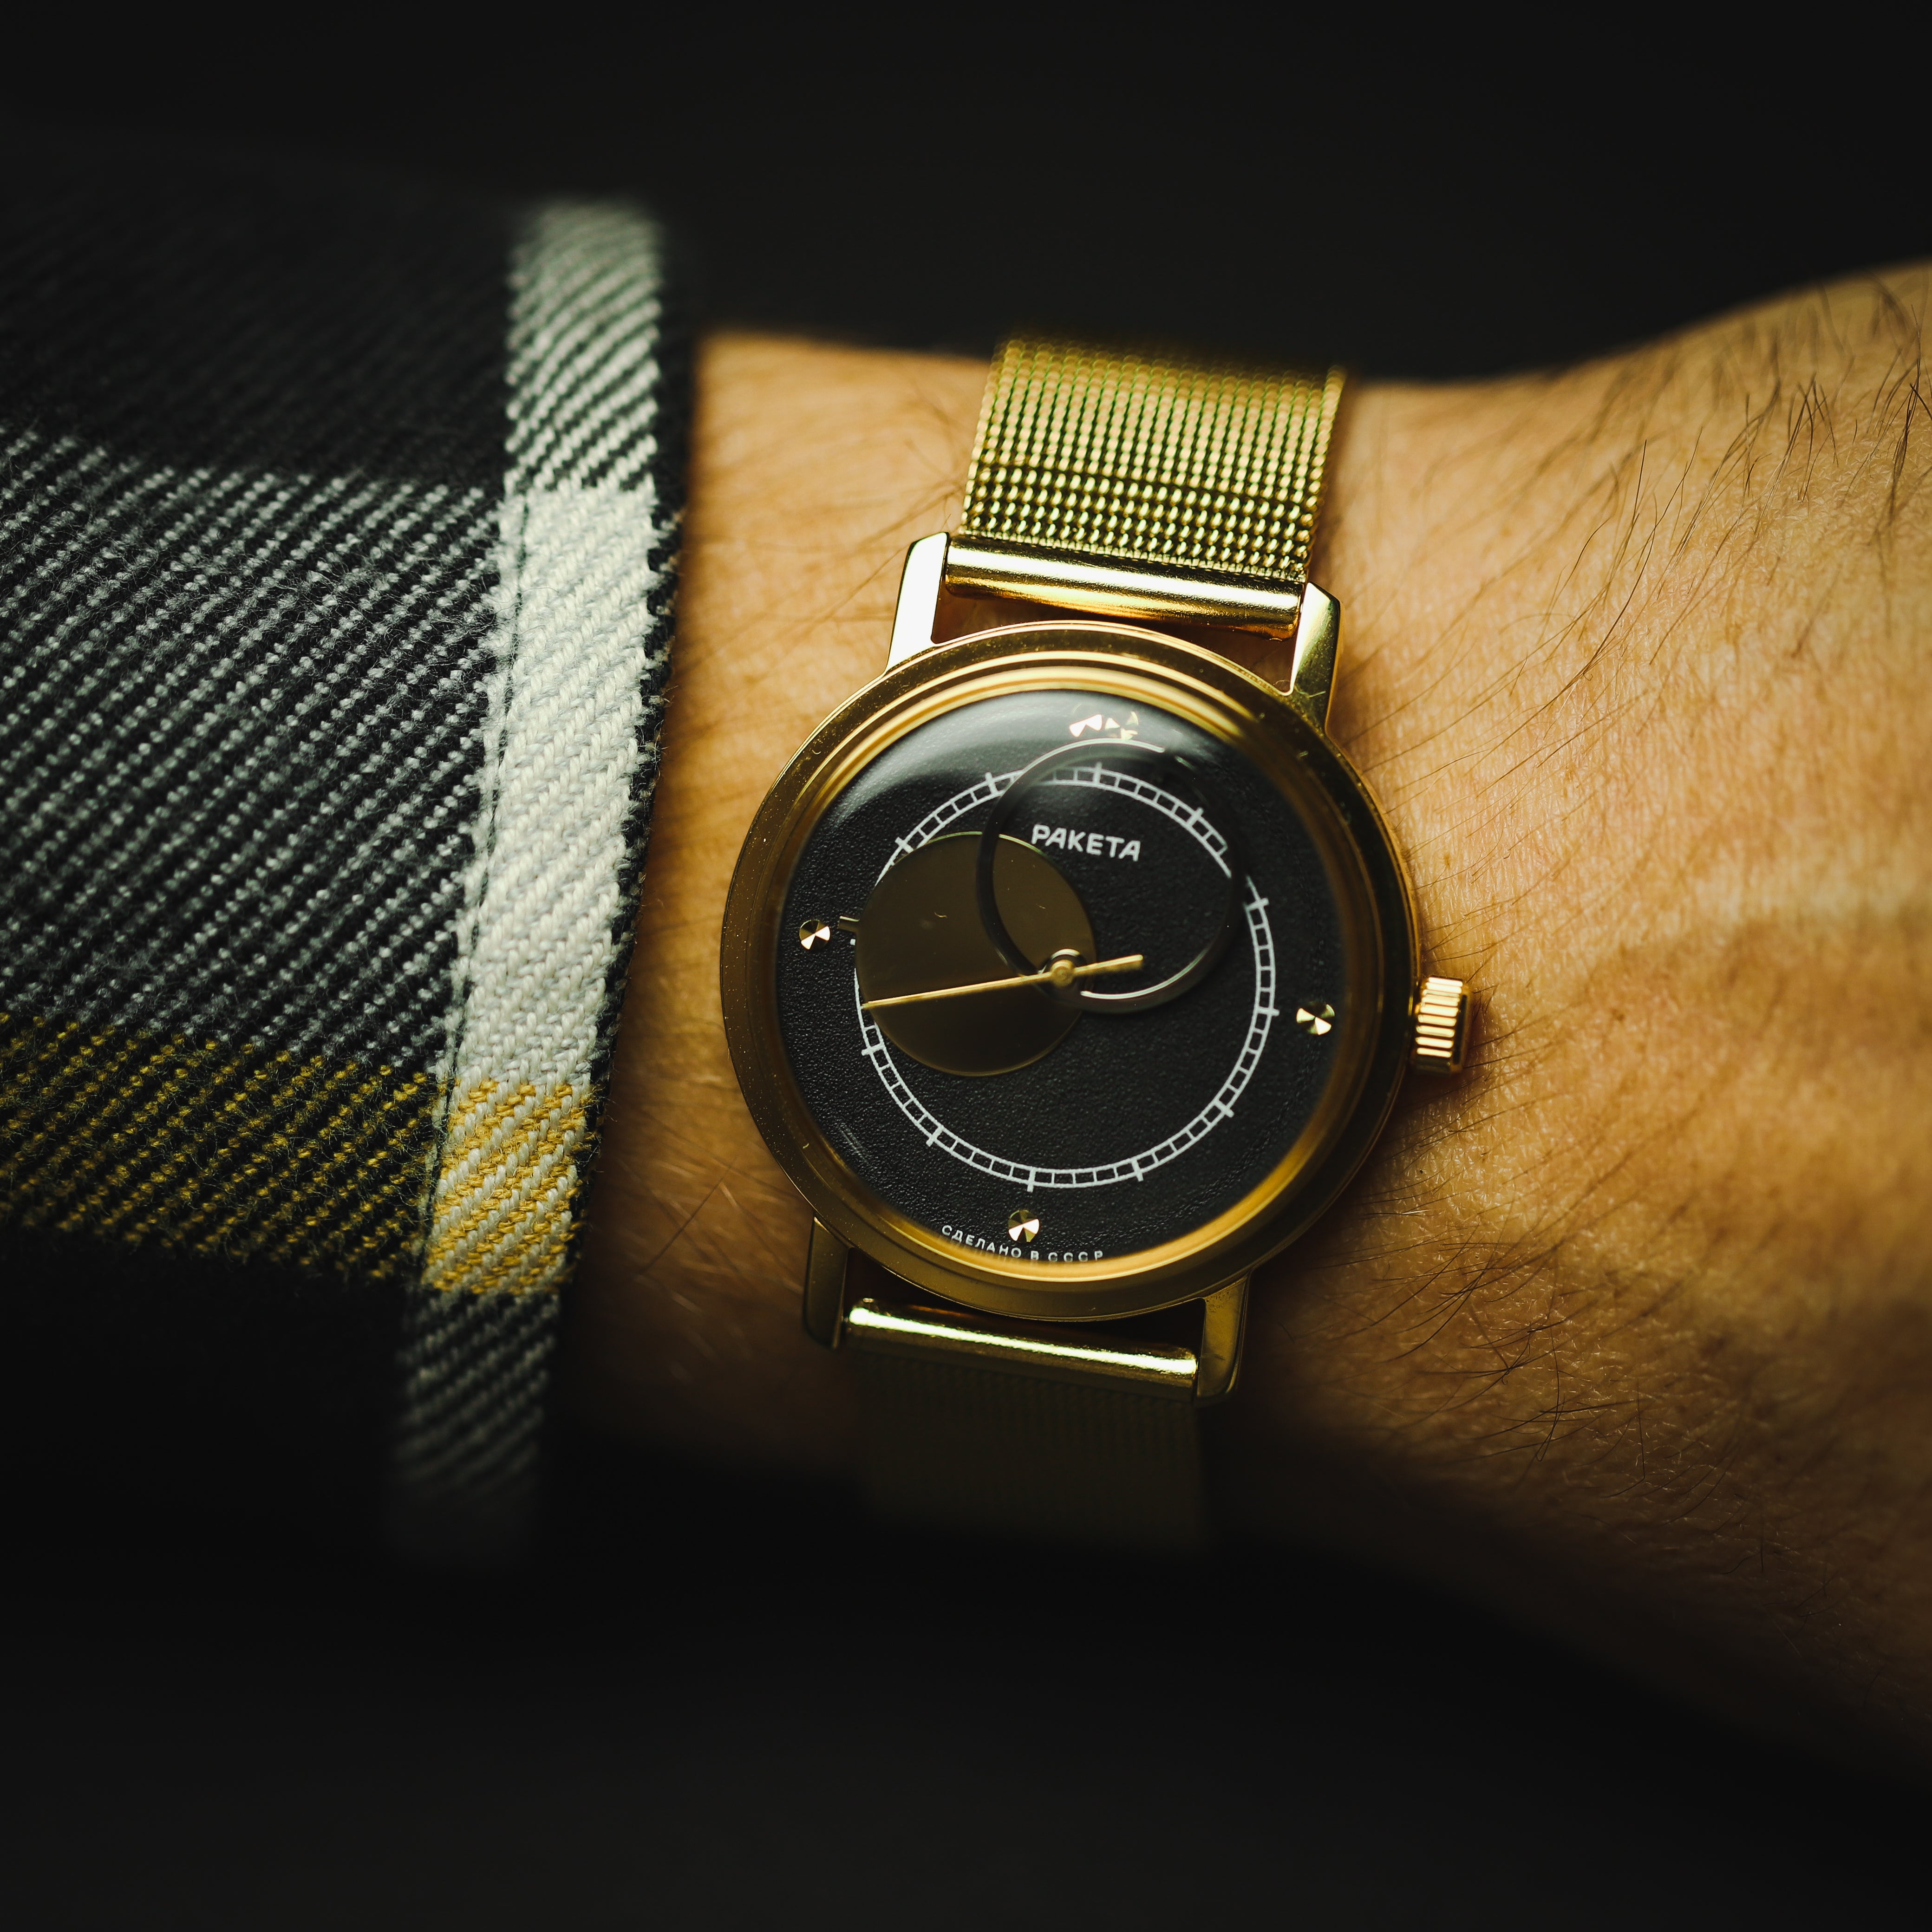 Ultra rare soviet vintage men's wrist watch Raketa - Copernicus with stainless steel strap